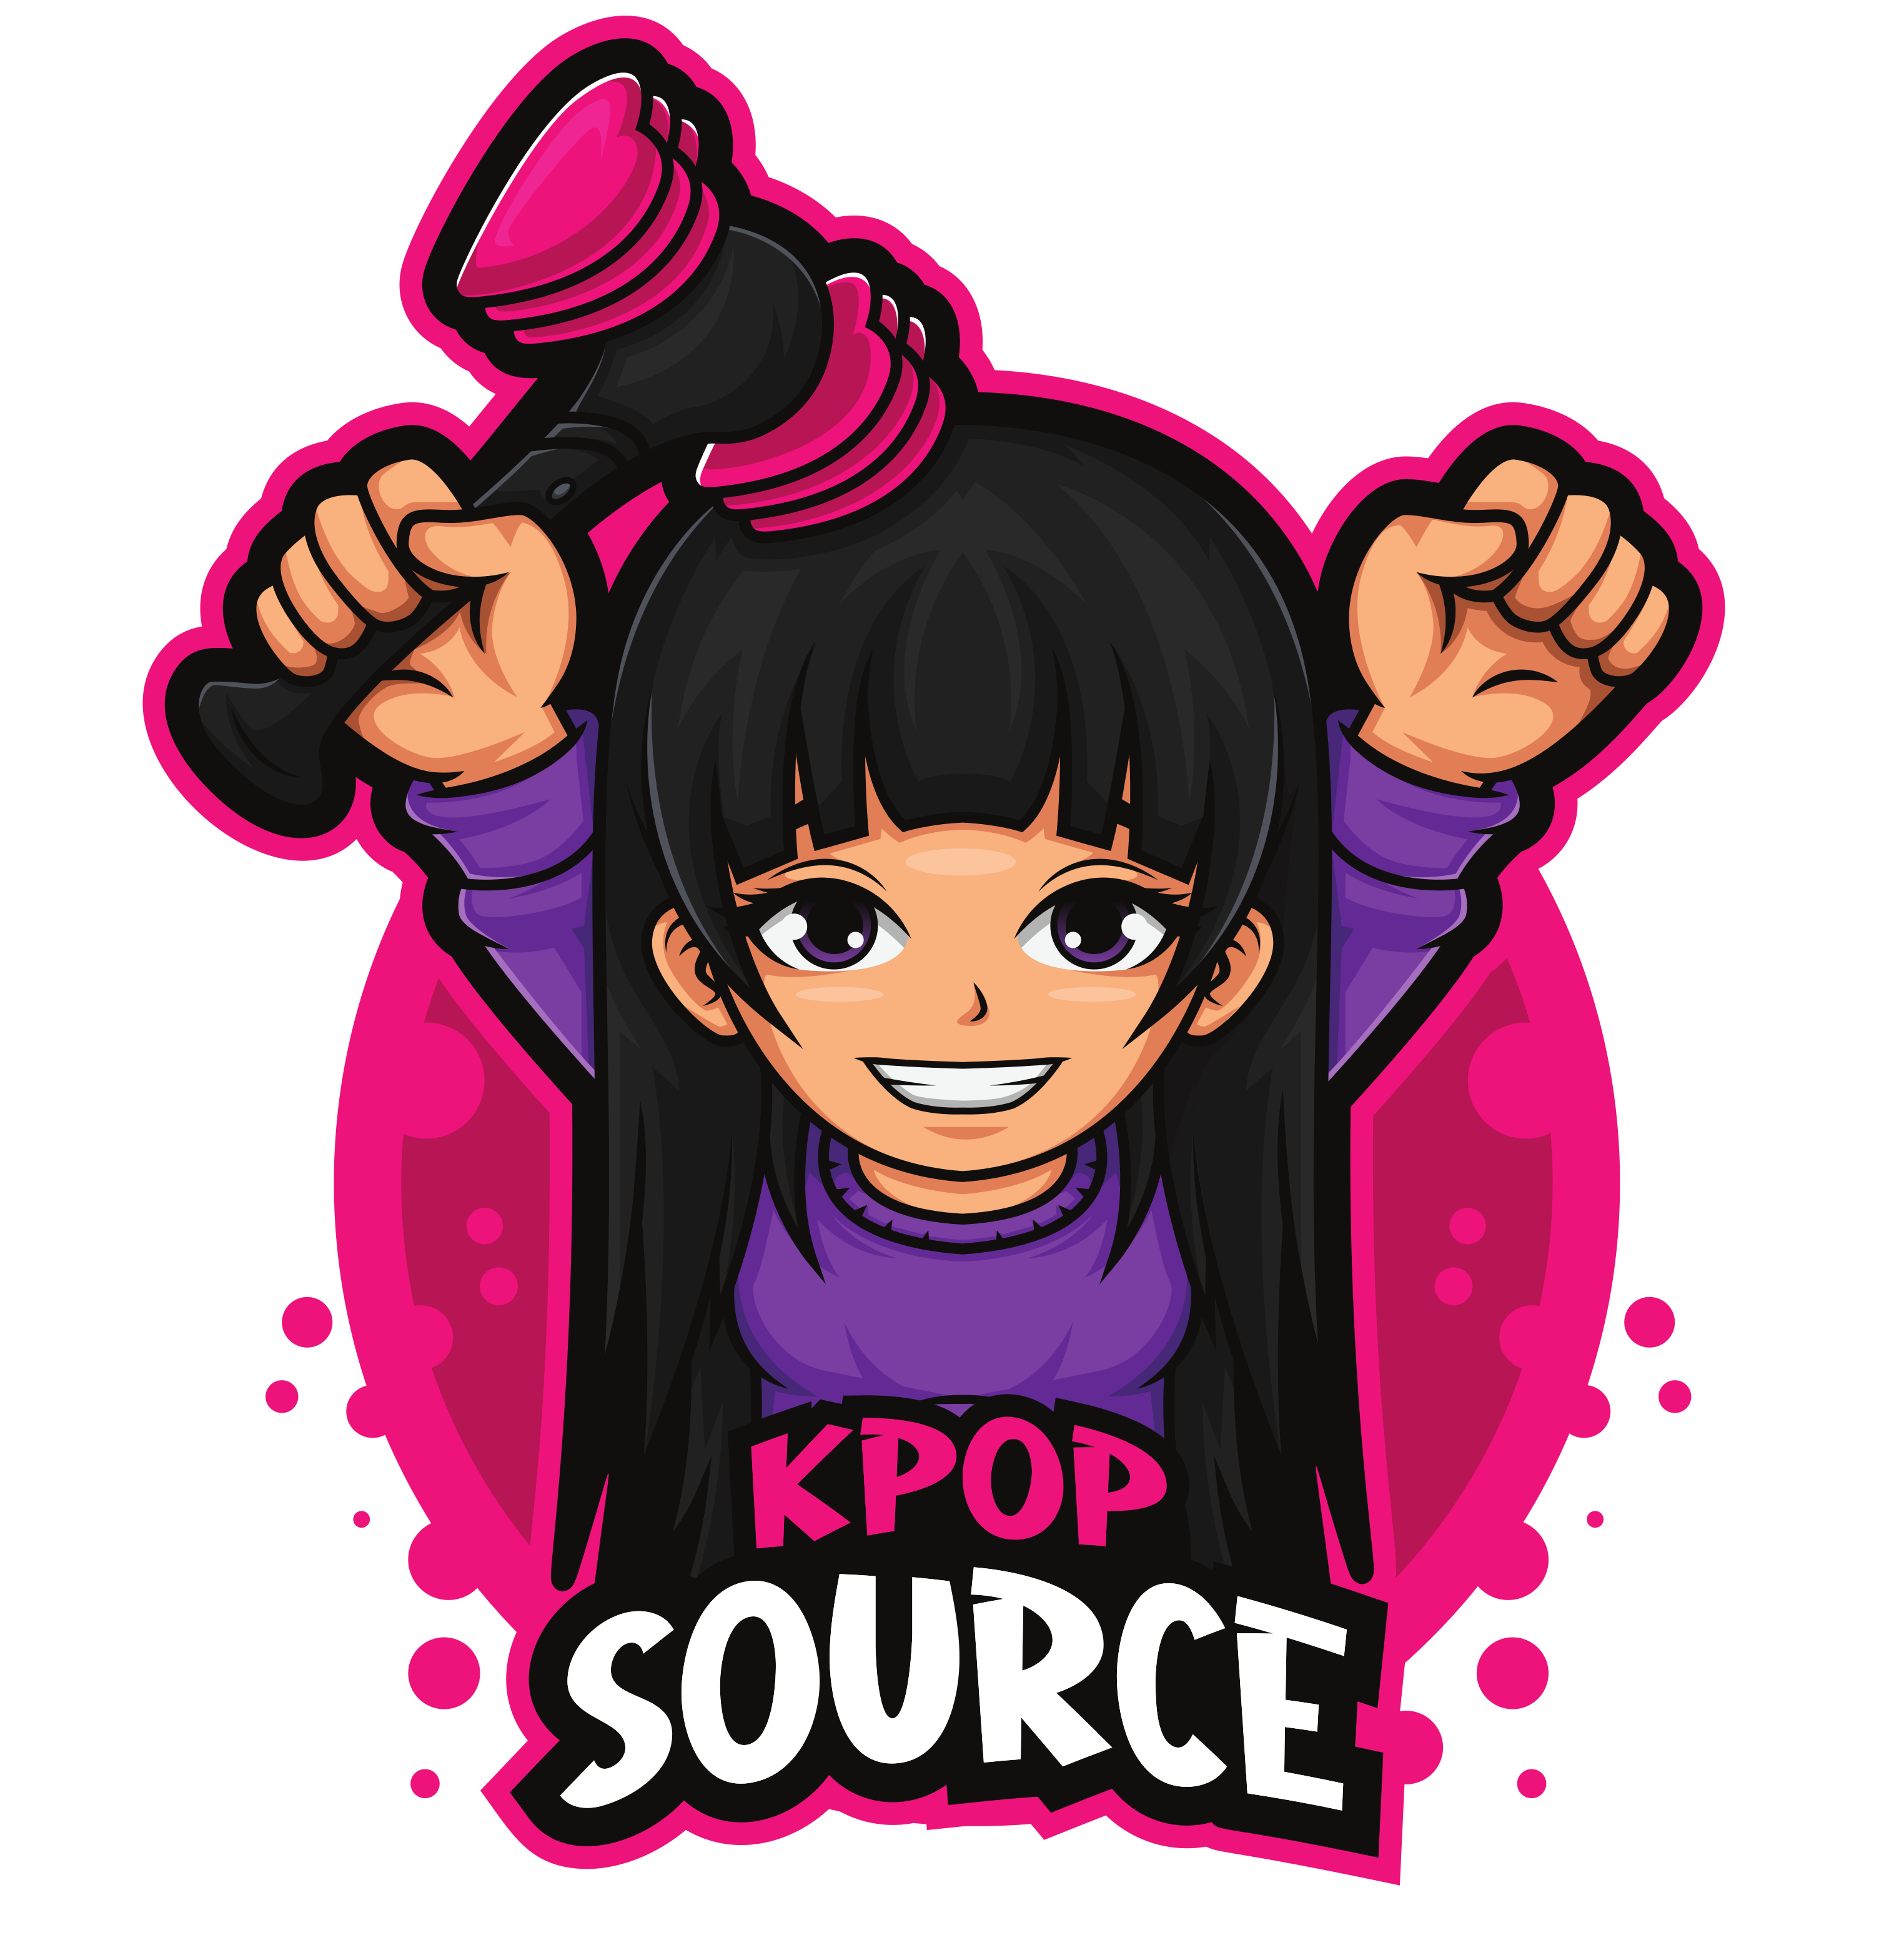 K-Pop Music, News, and Culture - KPOPSource.com